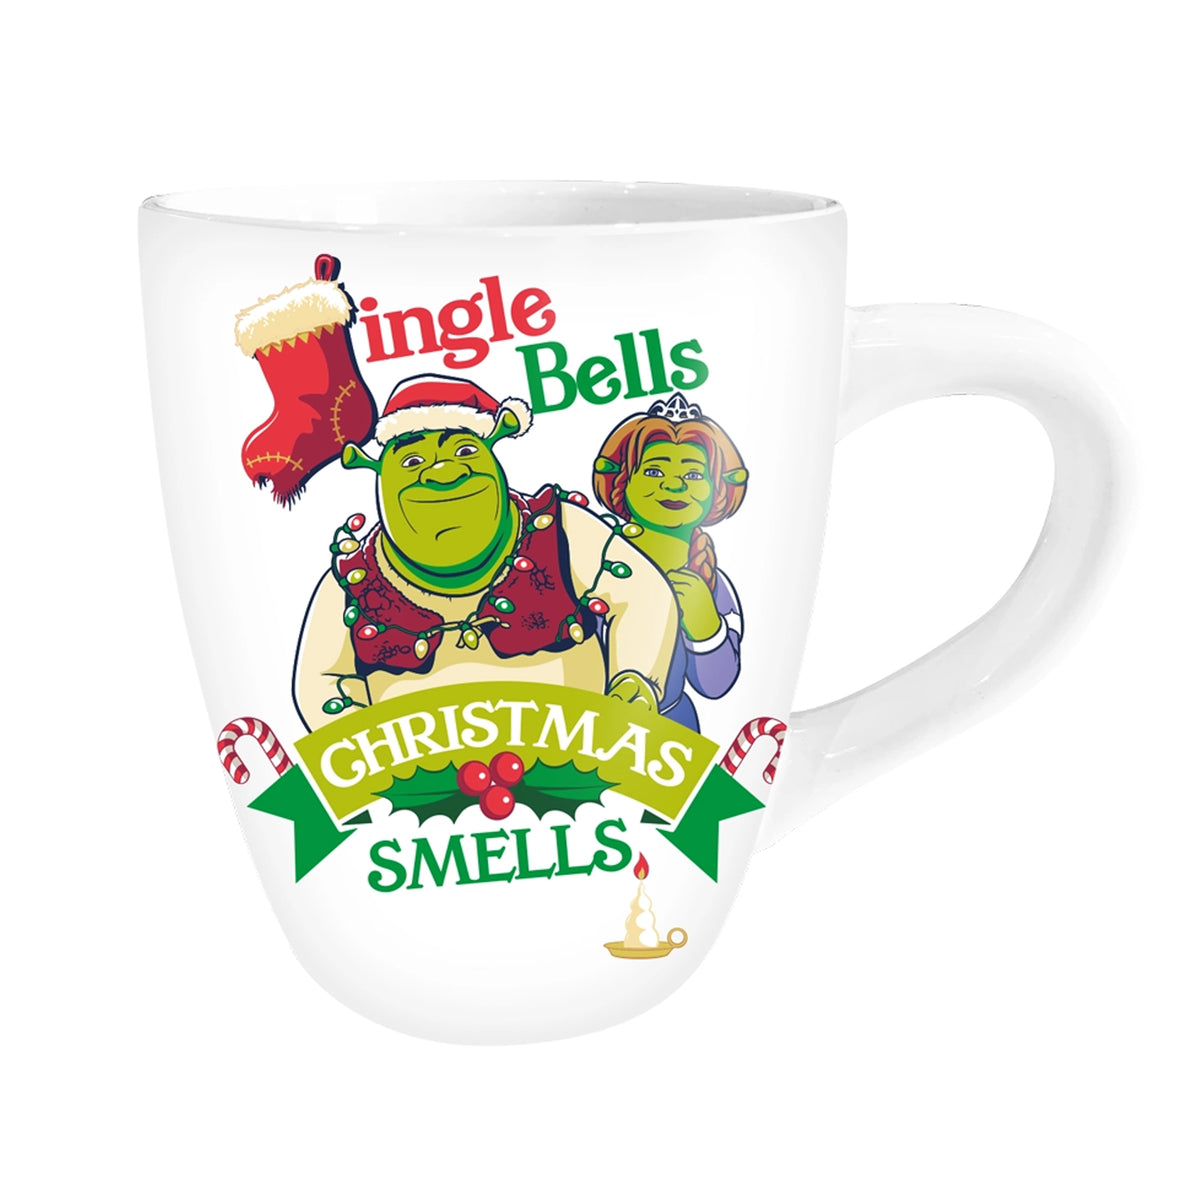 Shrek Christmas Smells 25oz Jumbo Curved Ceramic Mug -